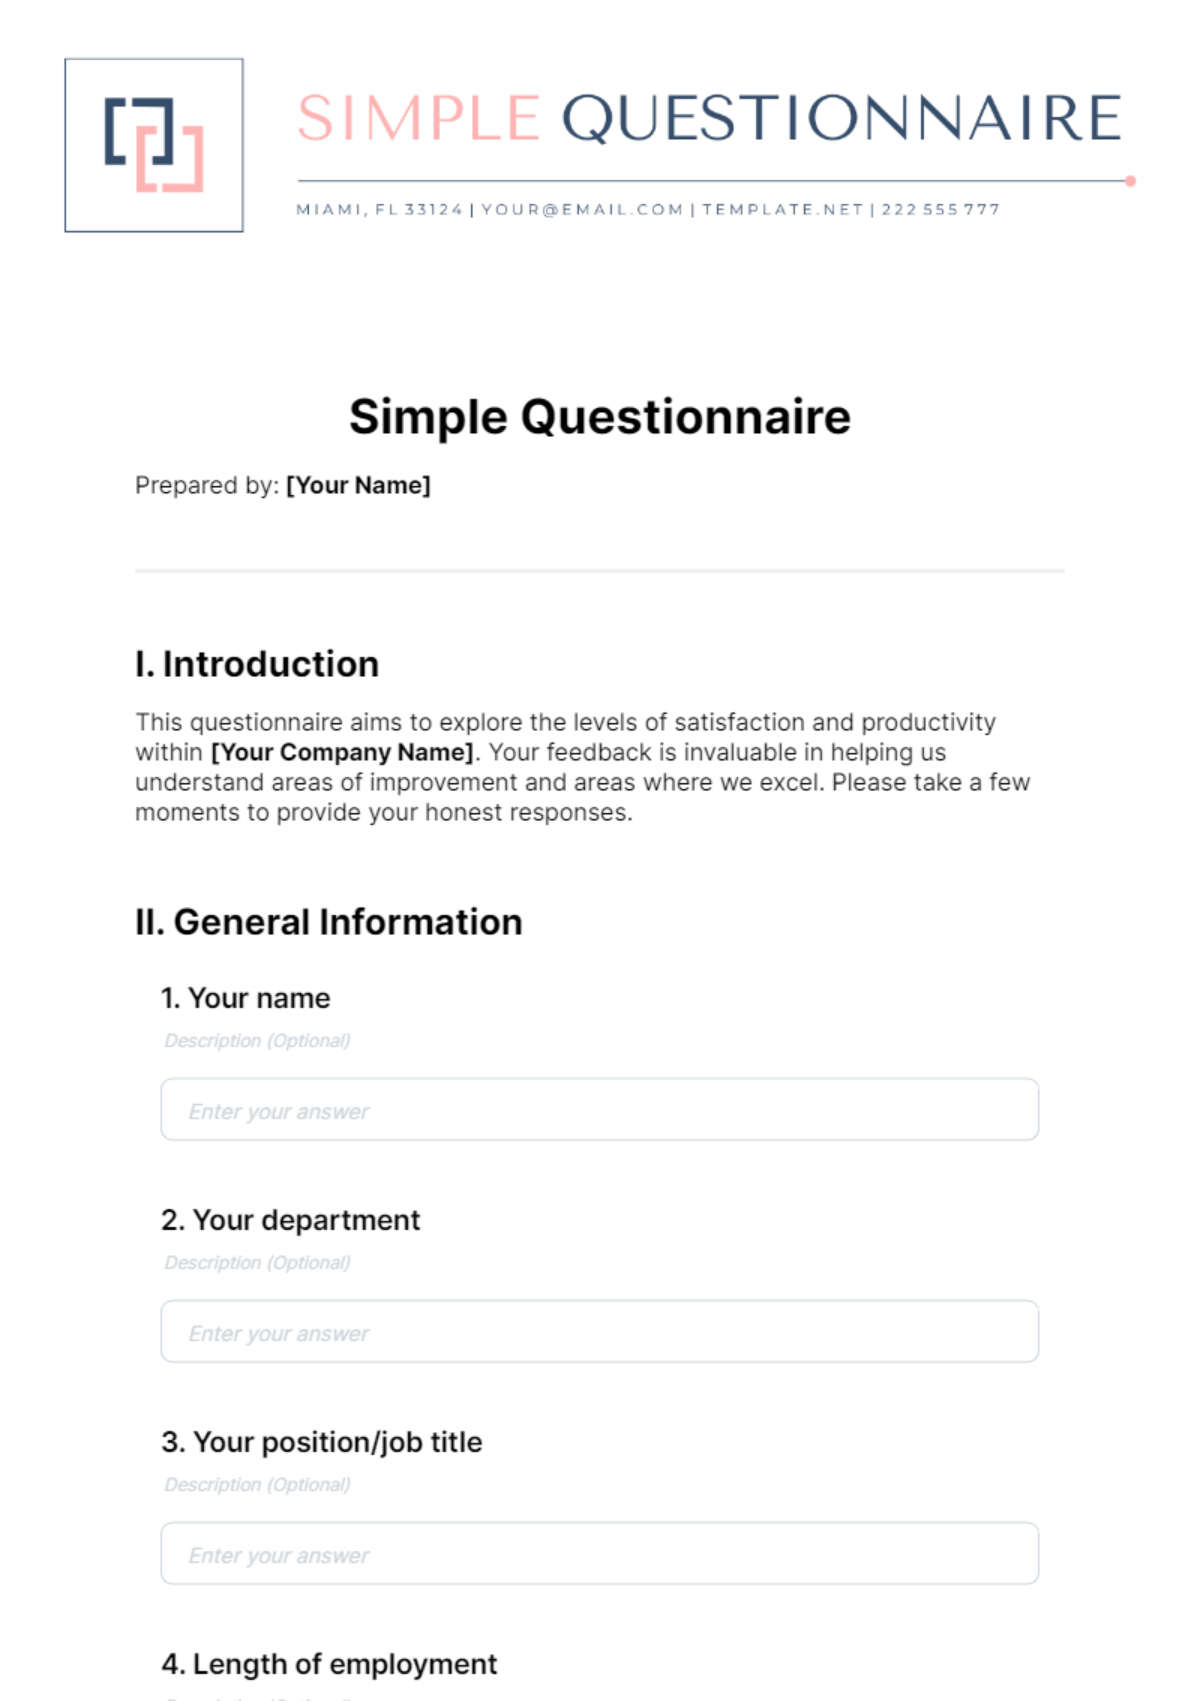 Simple Questionnaire Form Template